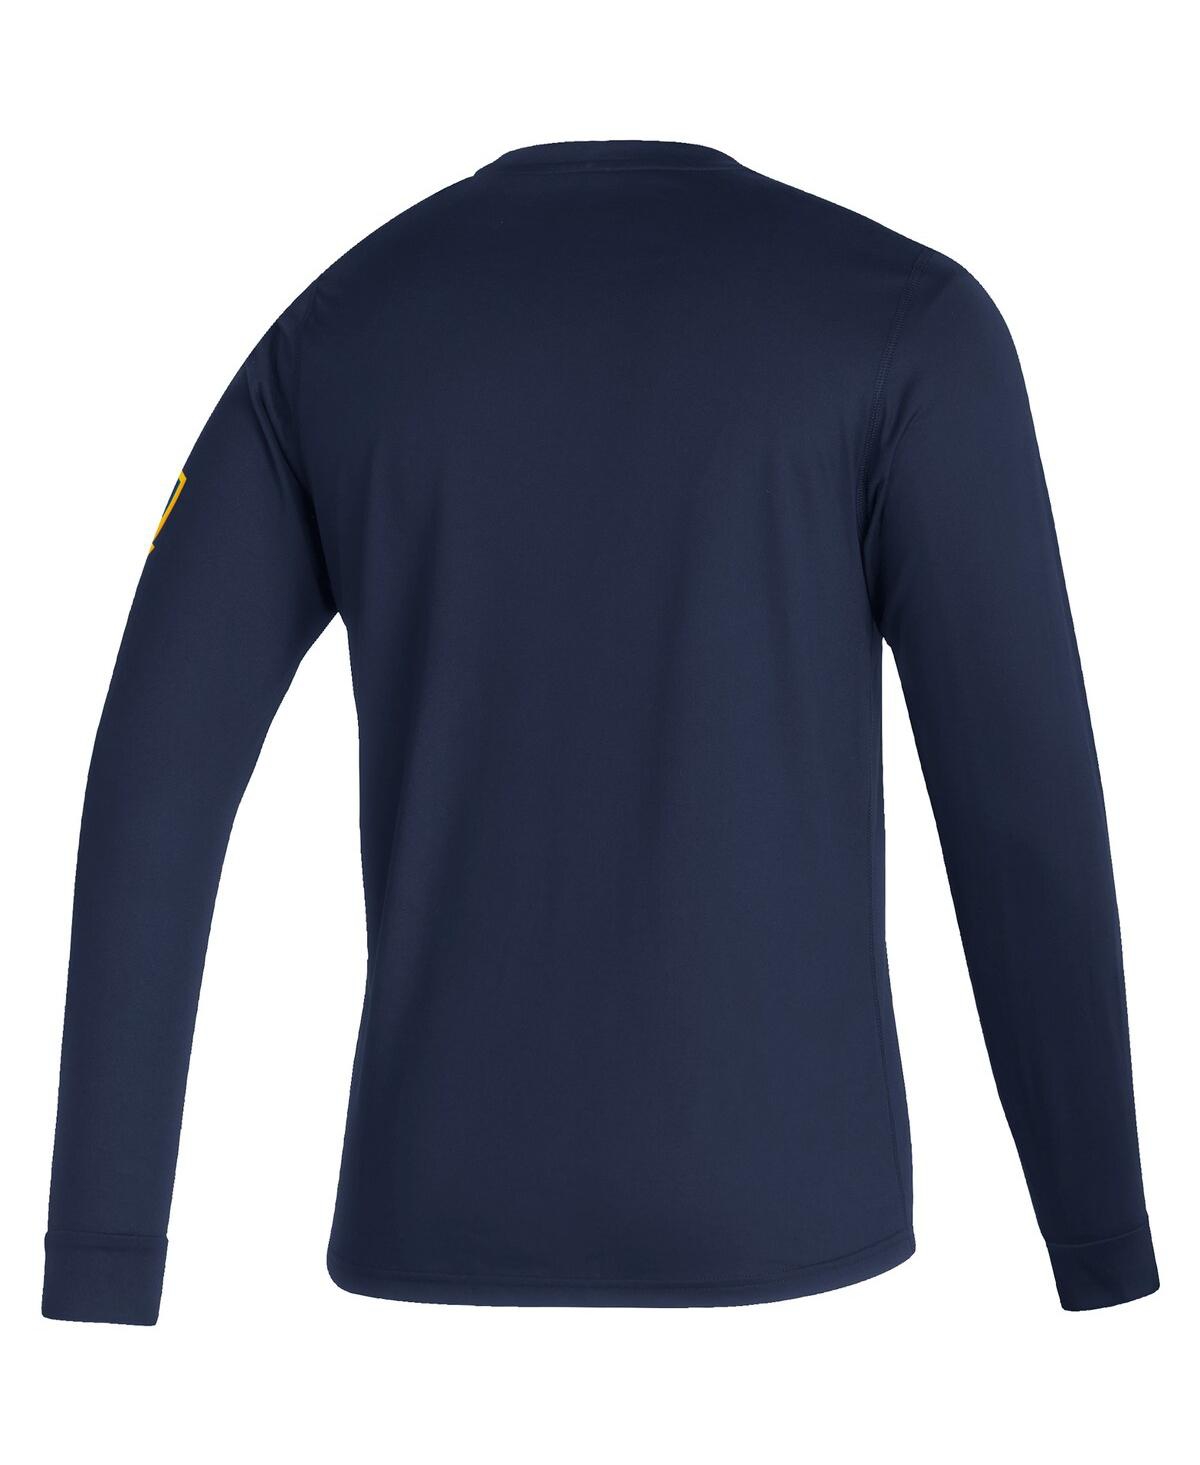 Shop Adidas Originals Men's Adidas Navy La Galaxy Vintage-inspired Aeroready Long Sleeve T-shirt